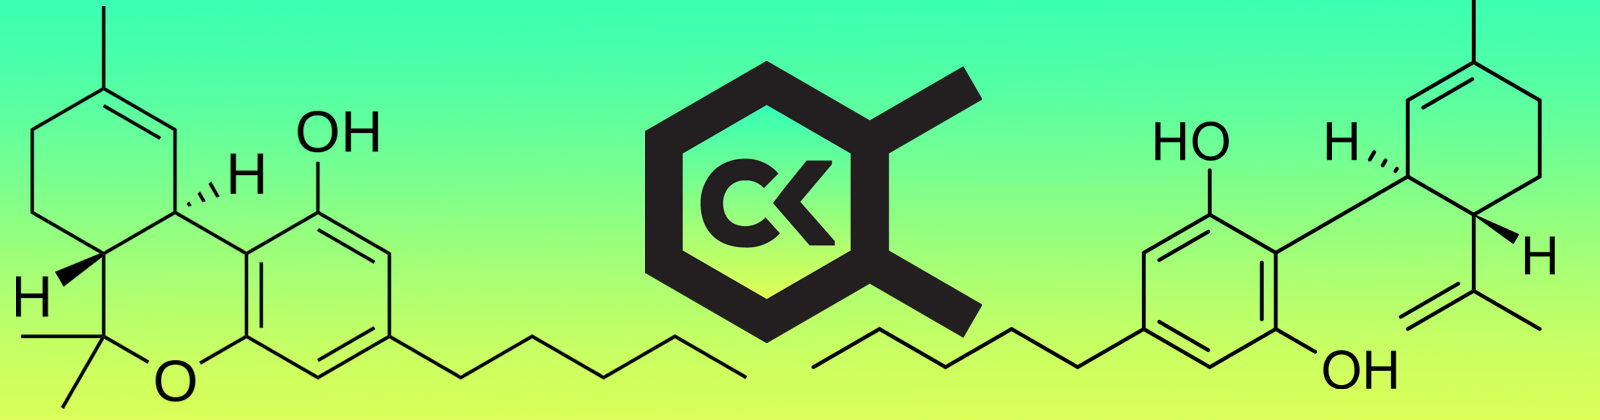 Cannakeys and cbd molecule and thc molecule